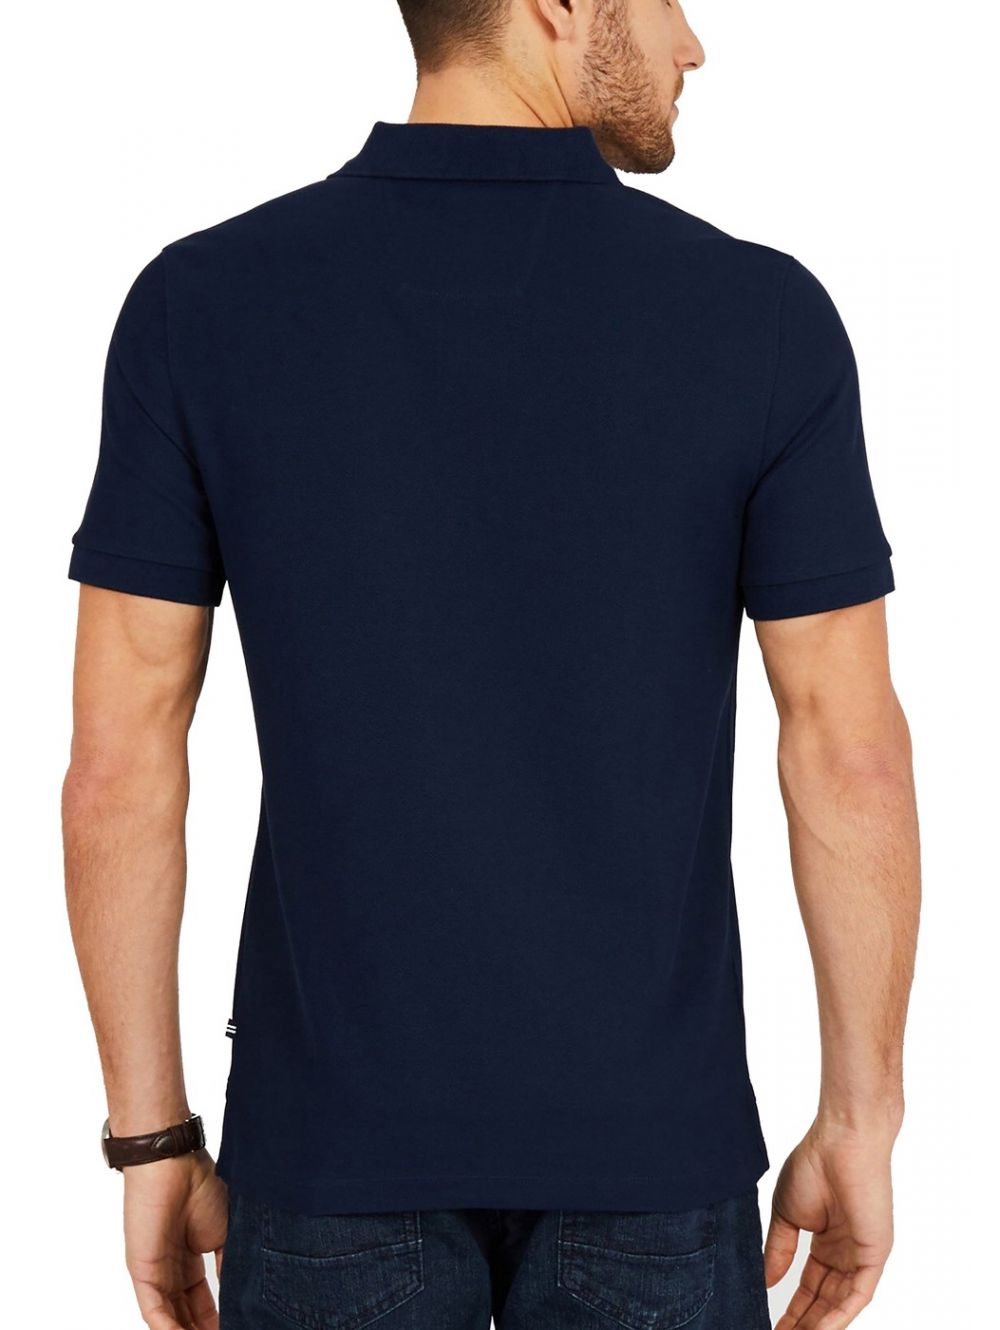 NAUTICA Men's blue navy short sleeve polo shirt K41050 4NV Navy. 